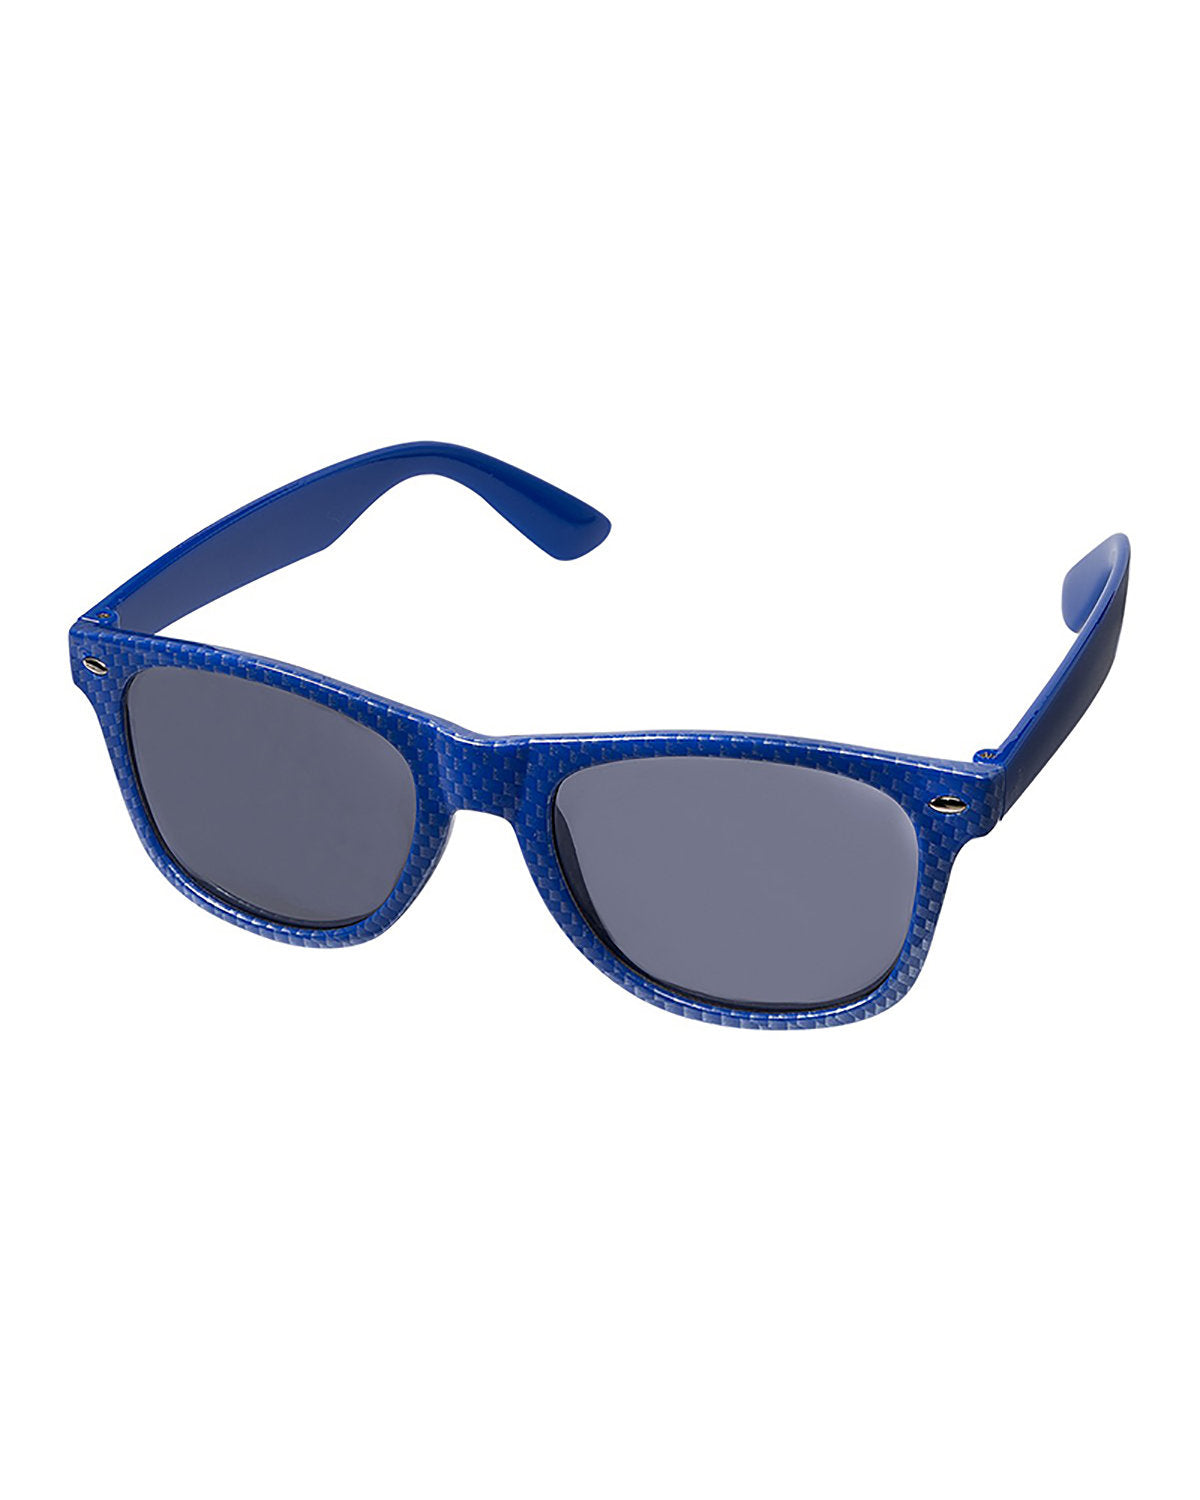 Carbon Fiber Retro Sunglasses